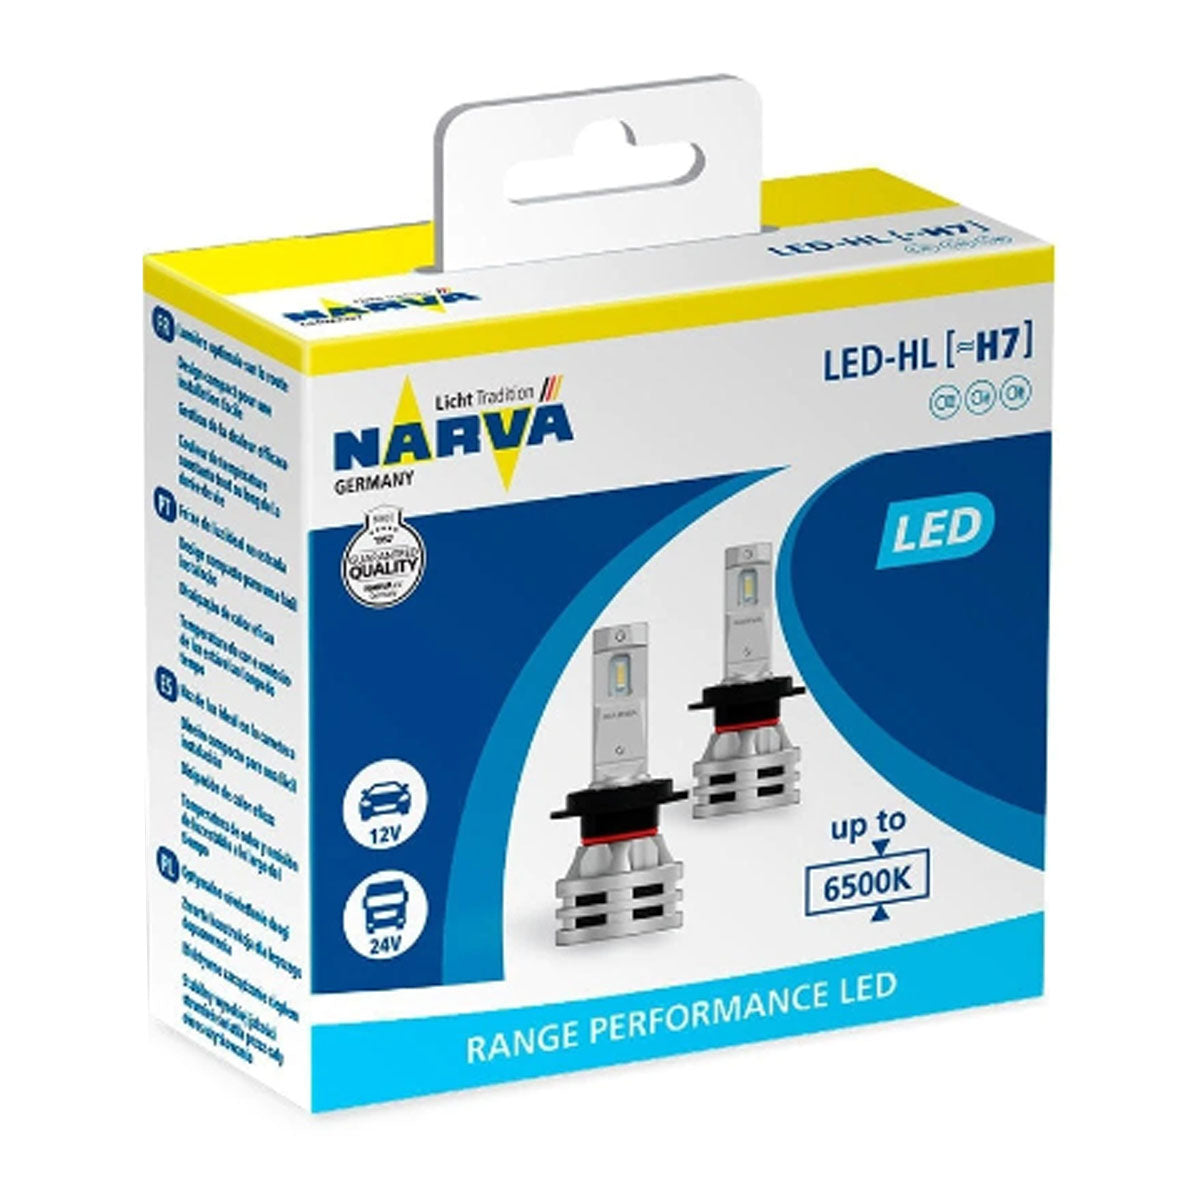 Kit de 2 bombillas de LED H7 50w para cruce y carretera 7000 lumen